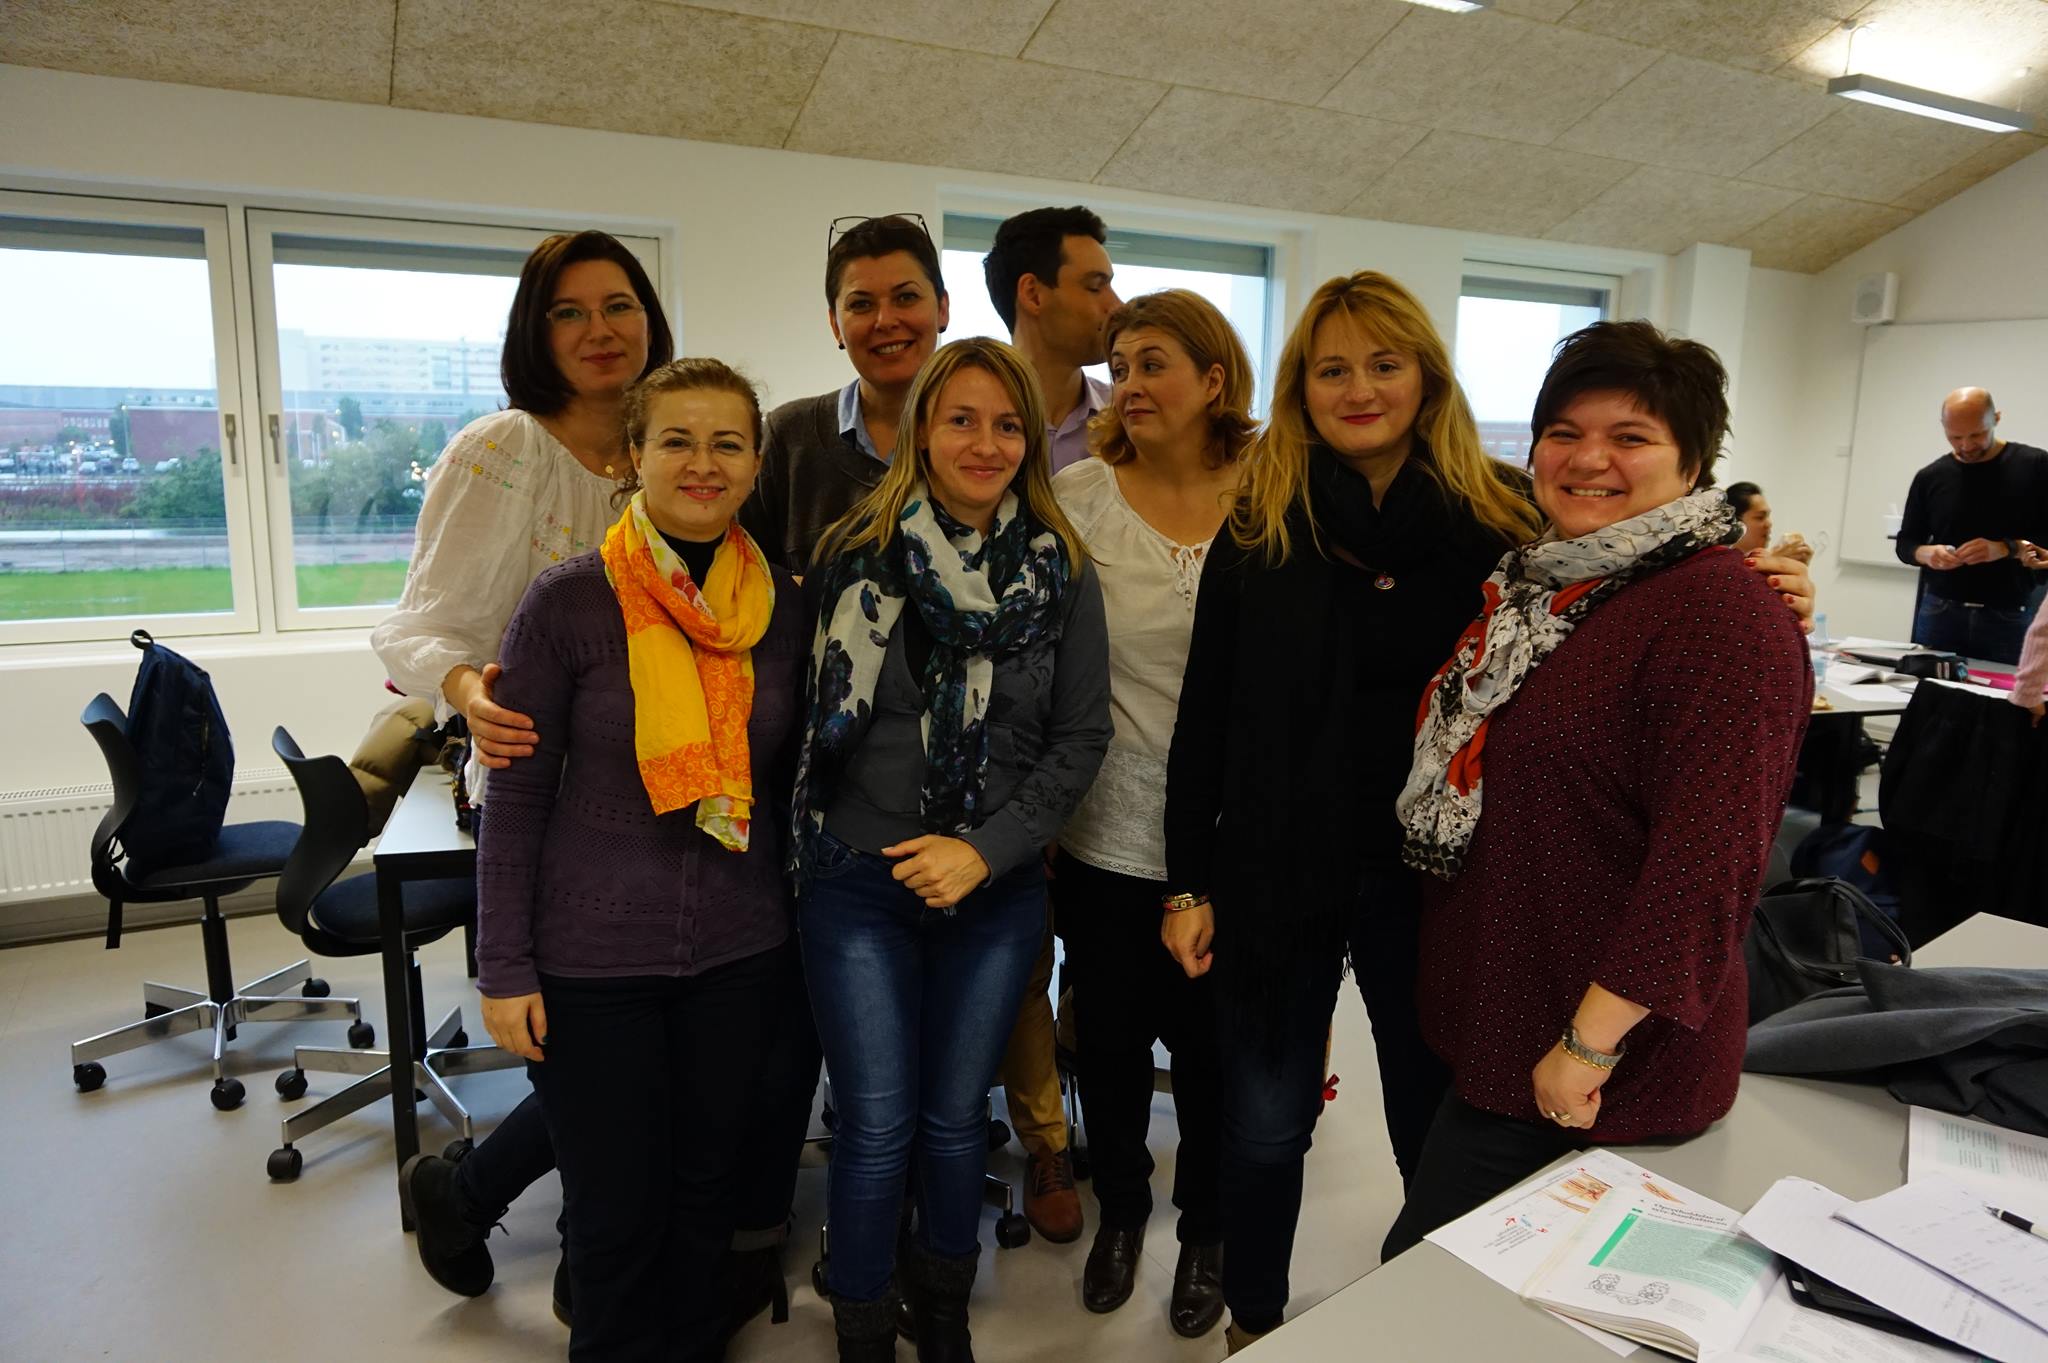 Scoala Postliceala FEG proiect Erasmus+2014-1-RO01-KA102-001320